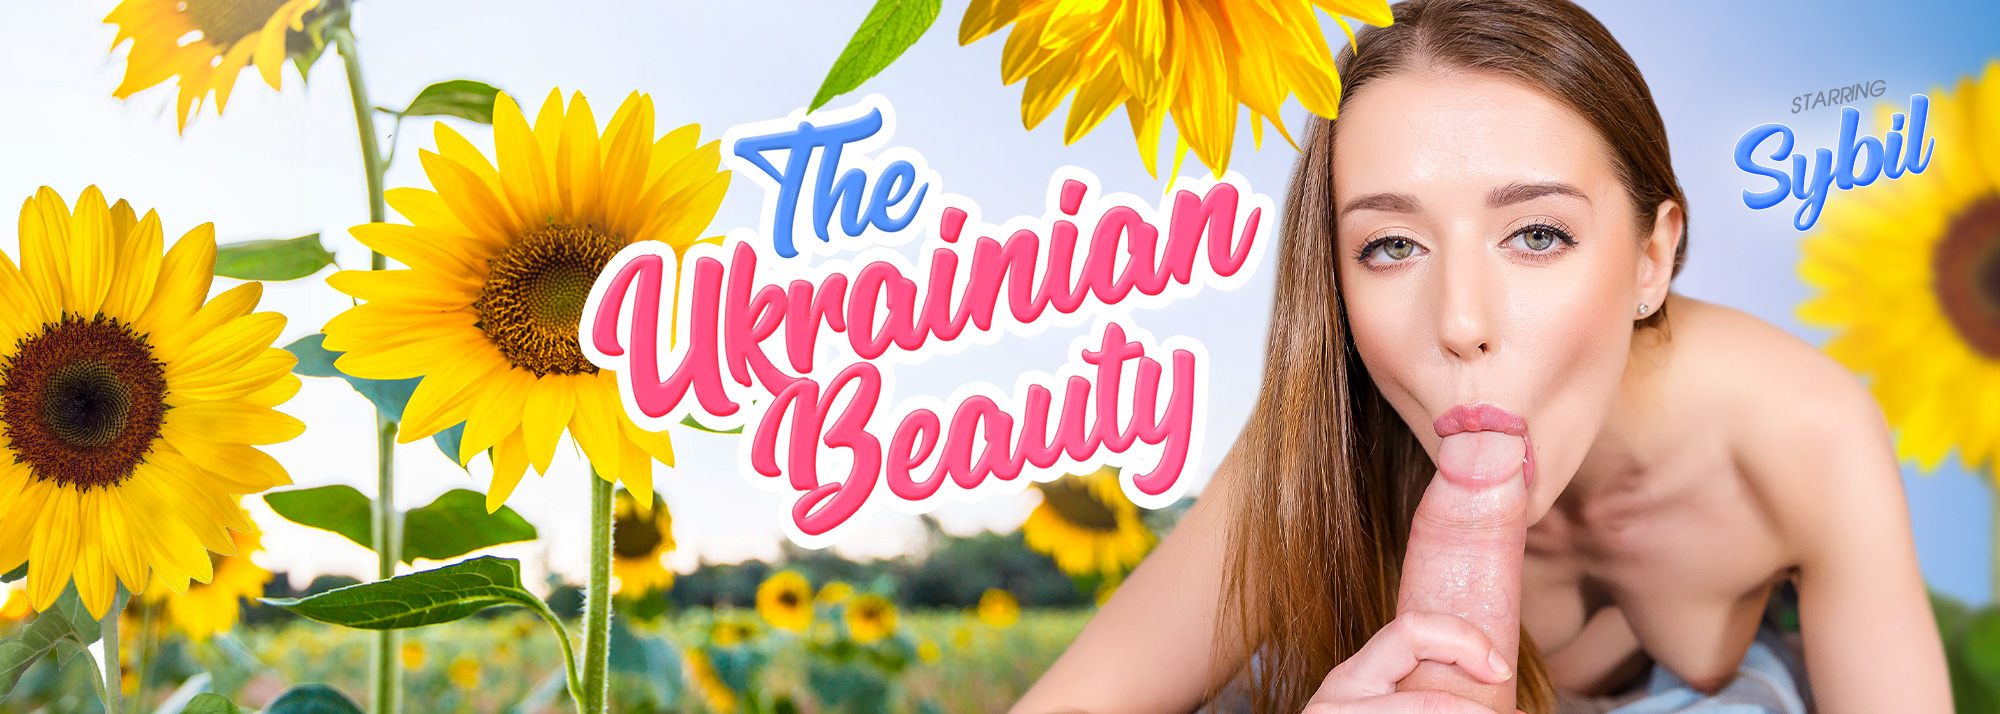 The Ukrainian Beauty with Sybil  Slideshow